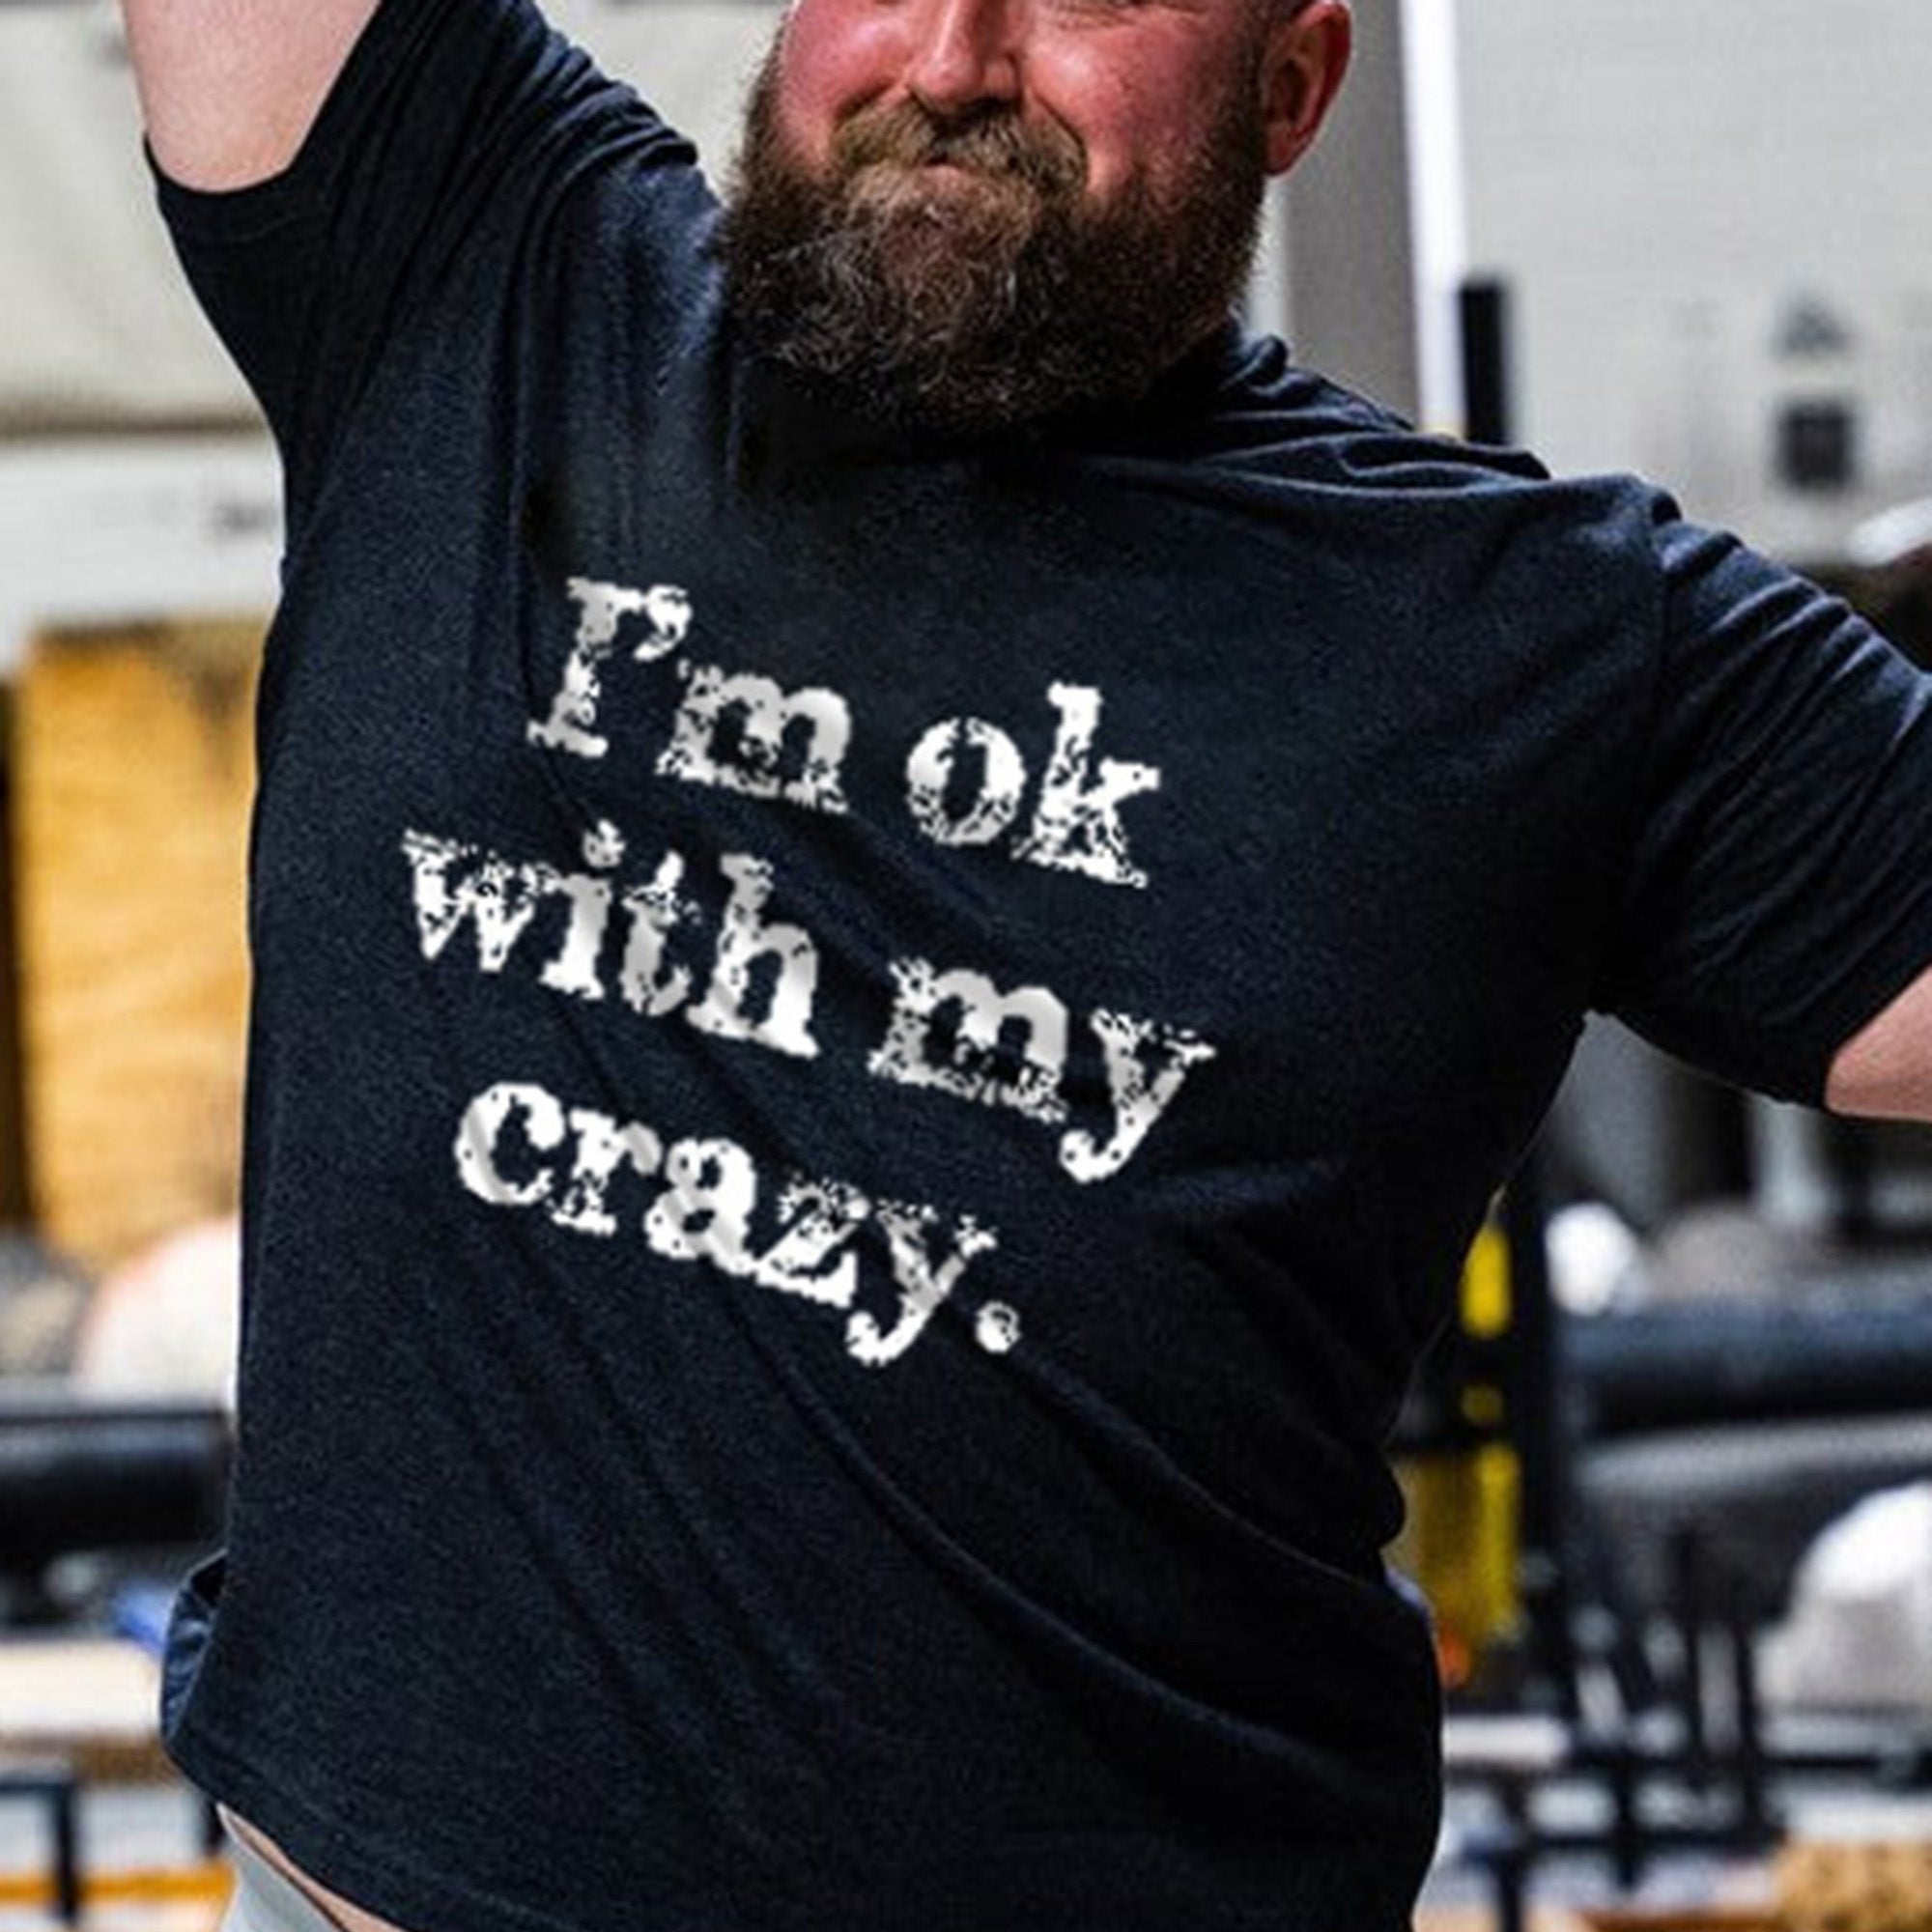 I'm Ok With My Crazy Printed Men's T-shirt